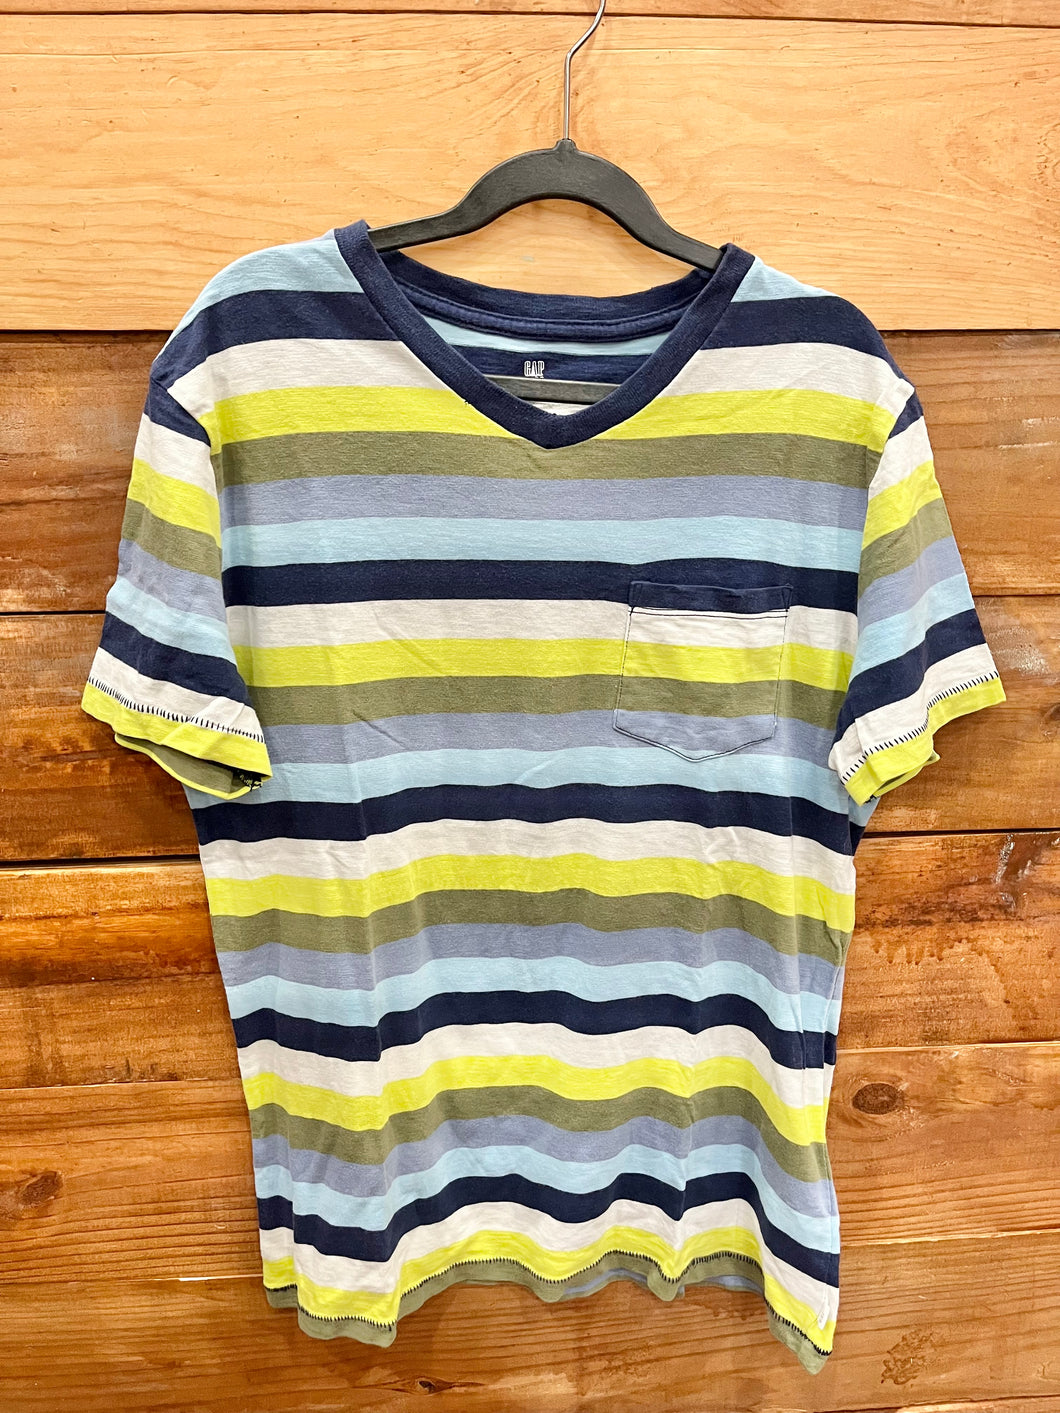 Gap Blue Striped Shirt Size 12